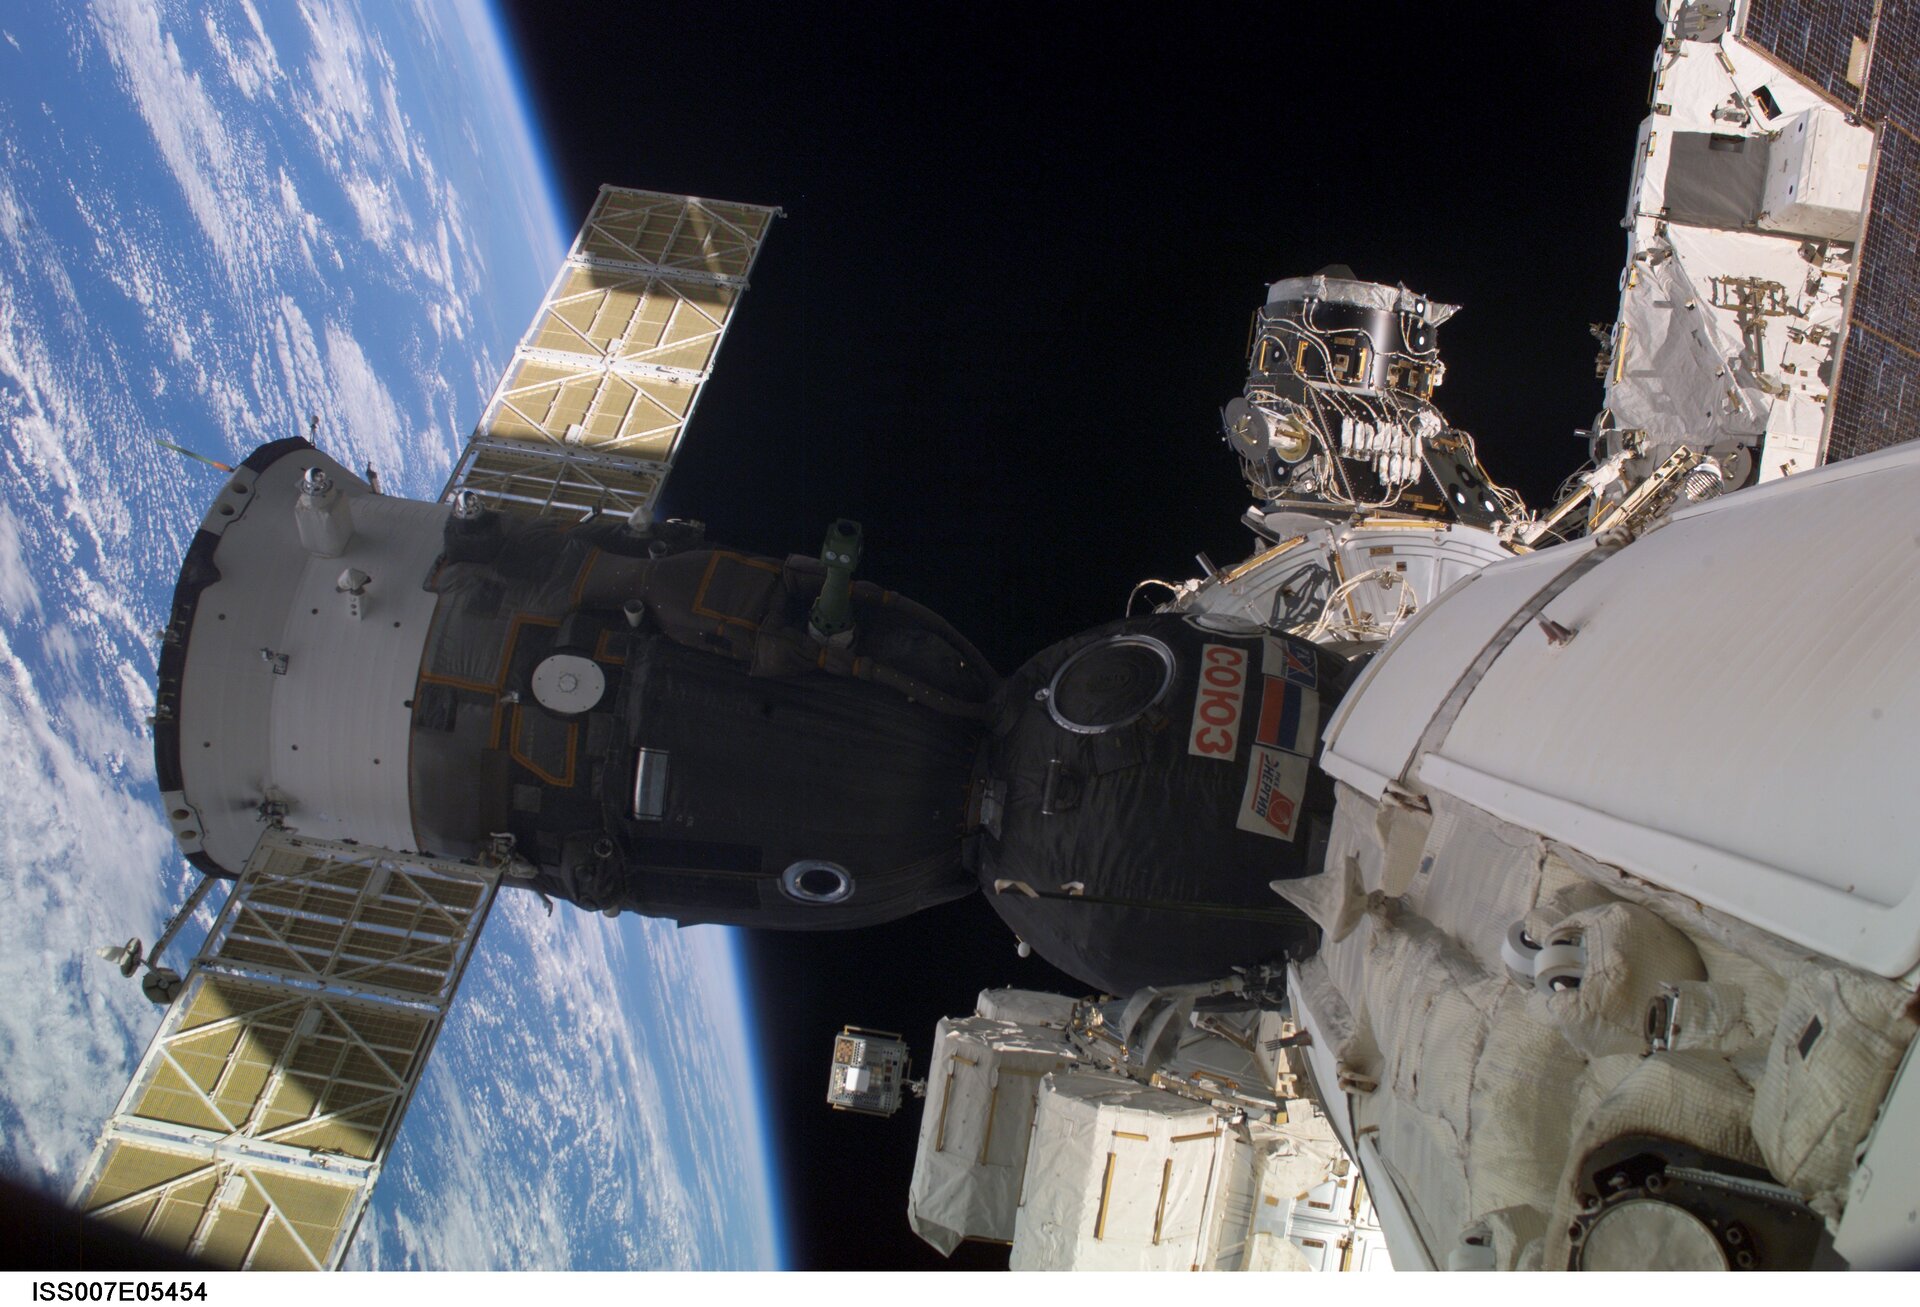 Soyuz TMA-2 spacecraft docked to the ISS